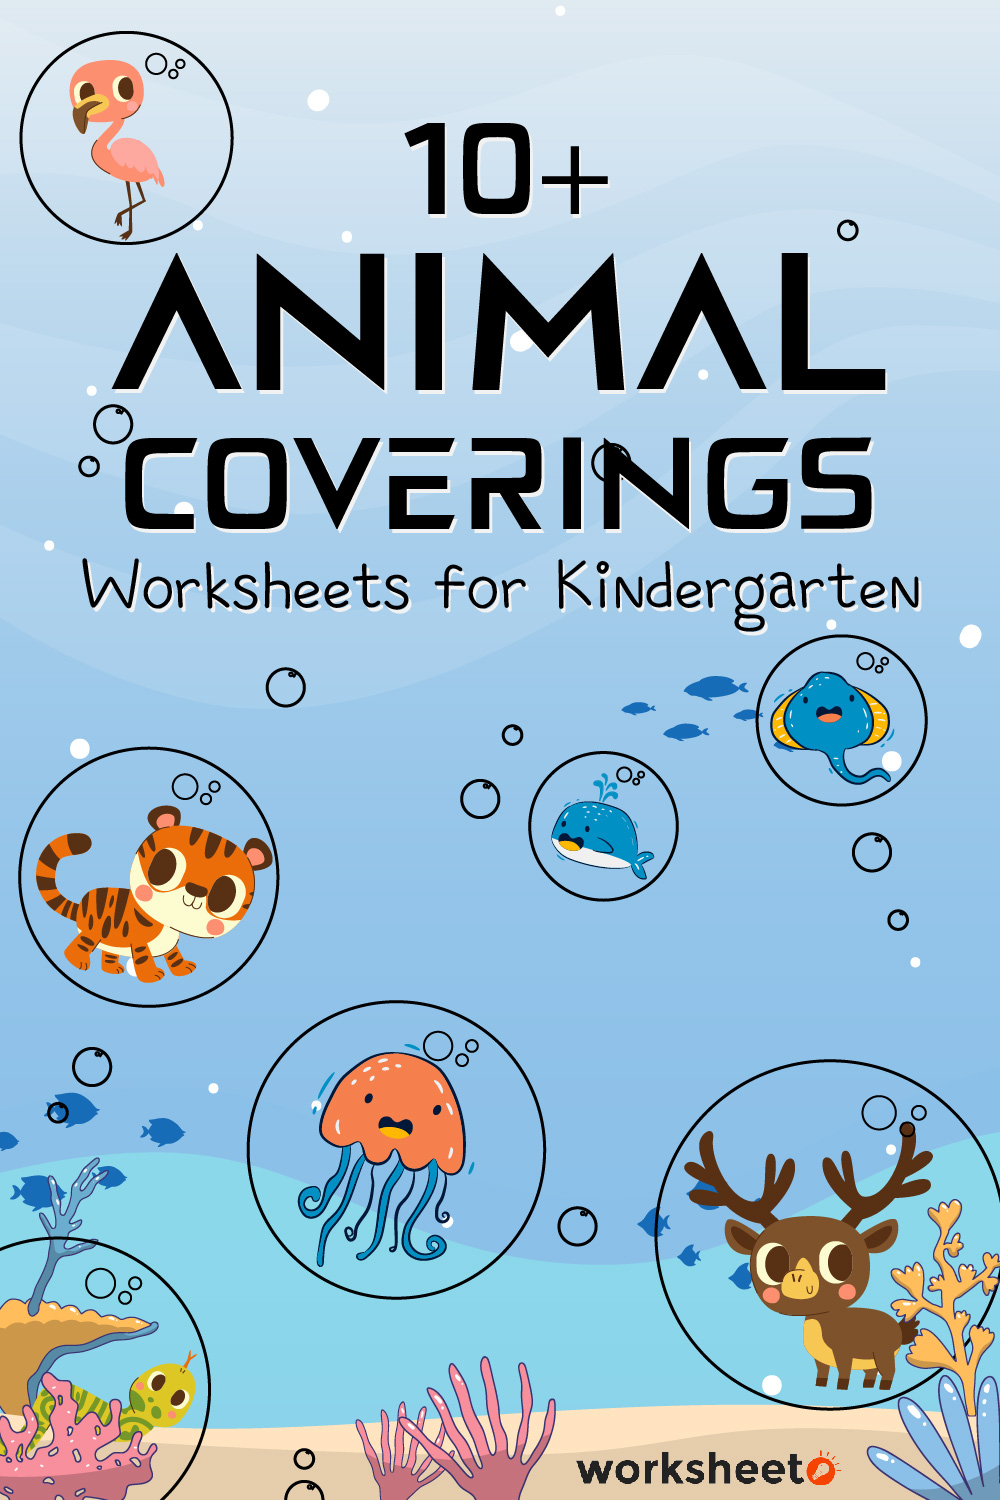 Animal Coverings Worksheets for Kindergarten